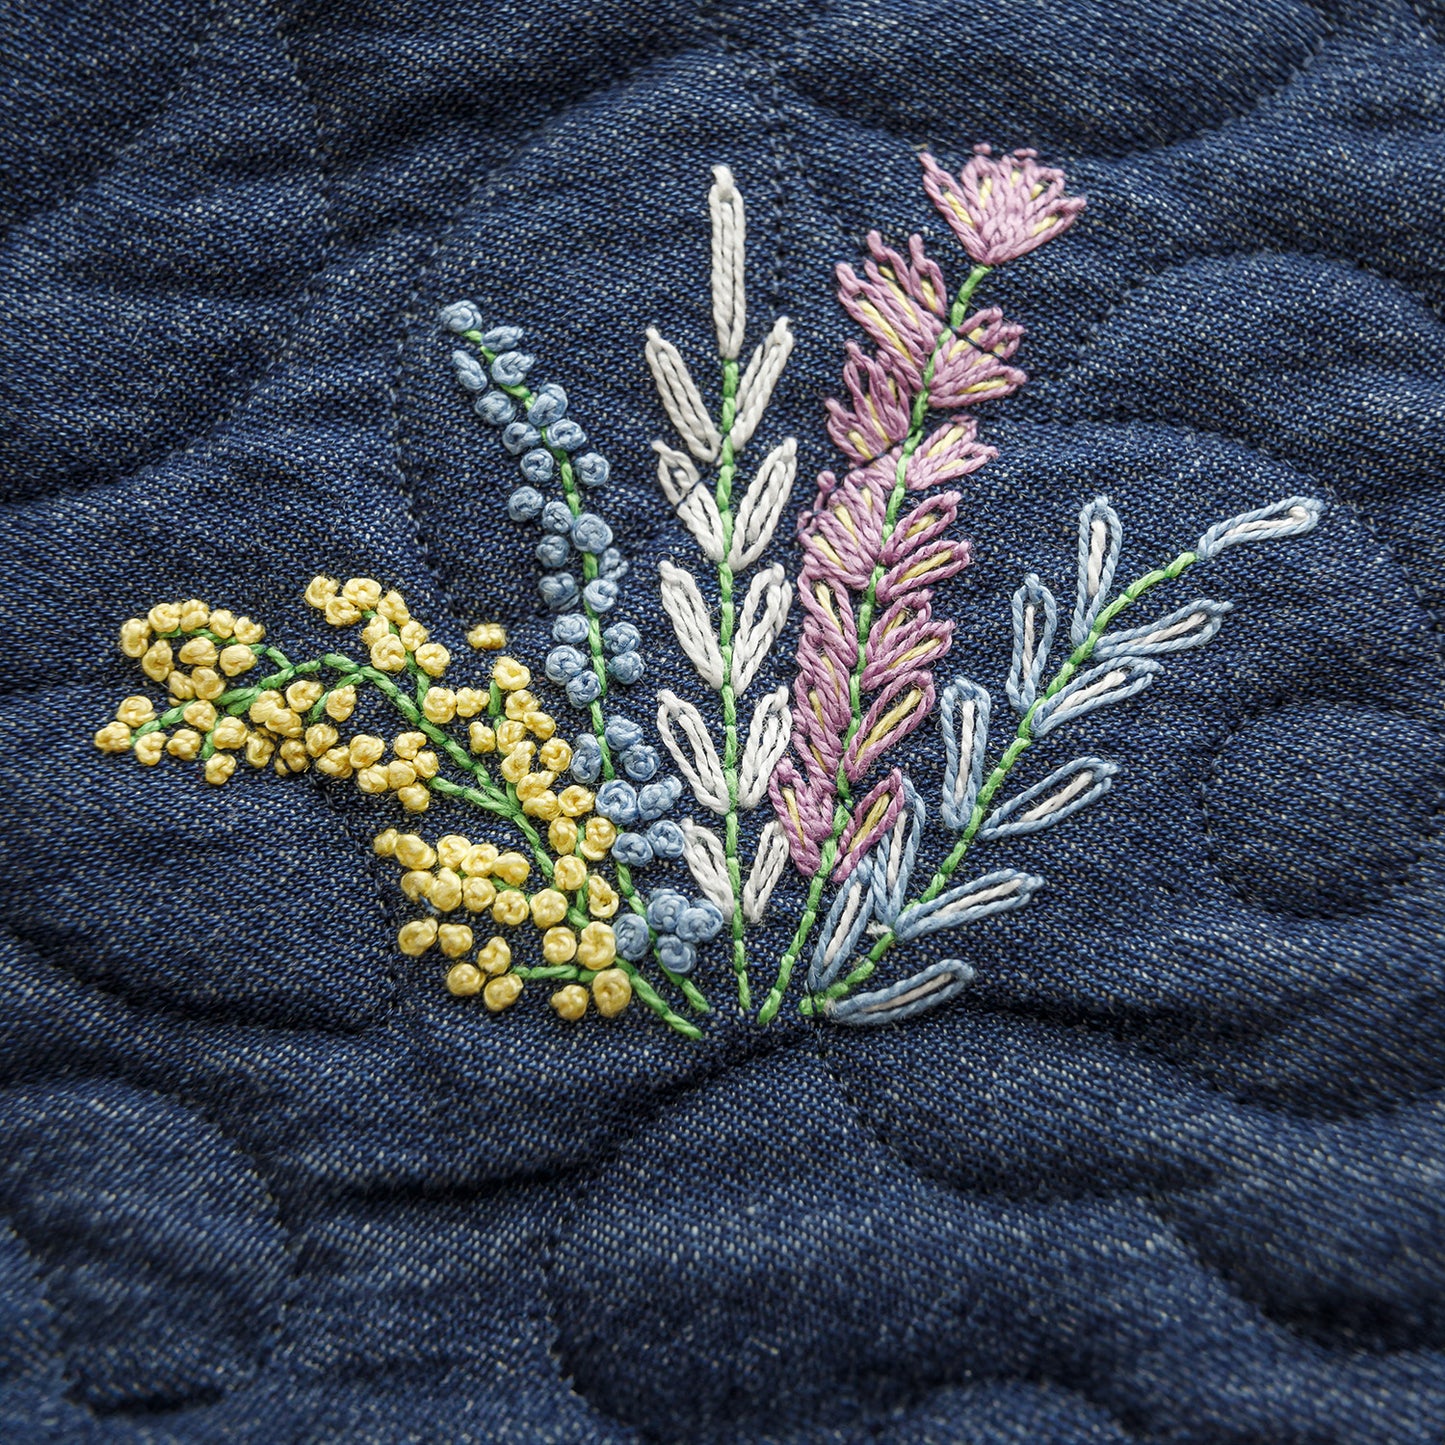 PREORDER - Ingrid's Wildflowers - An Heirloom Embroidery Kit by Missouri Star Alternative View #33